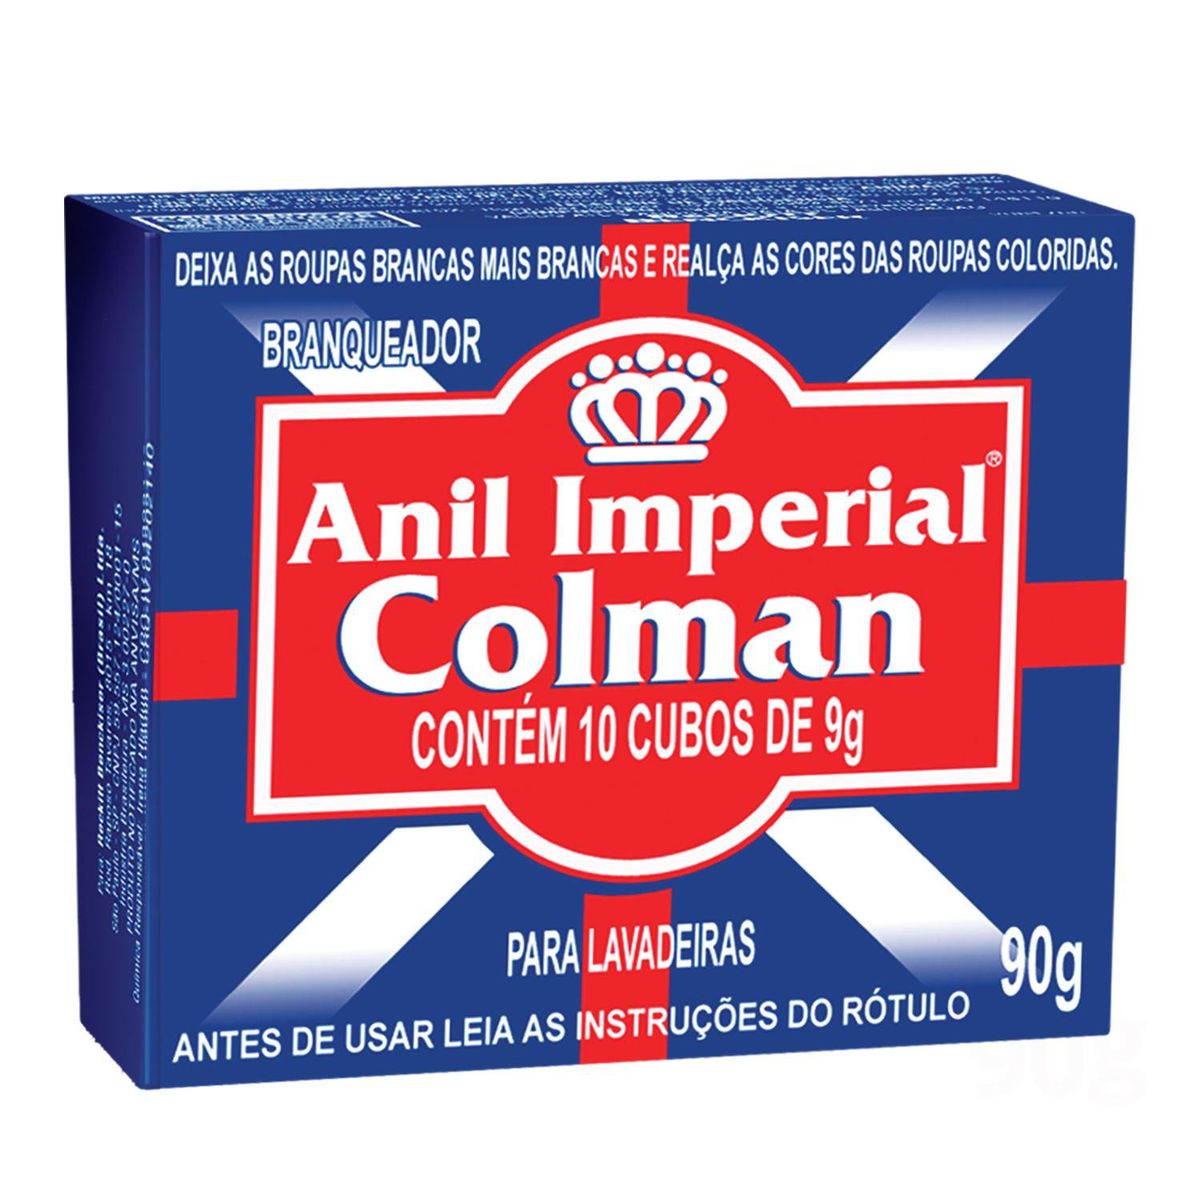 Branqueador Anil Imperial Colman 90g